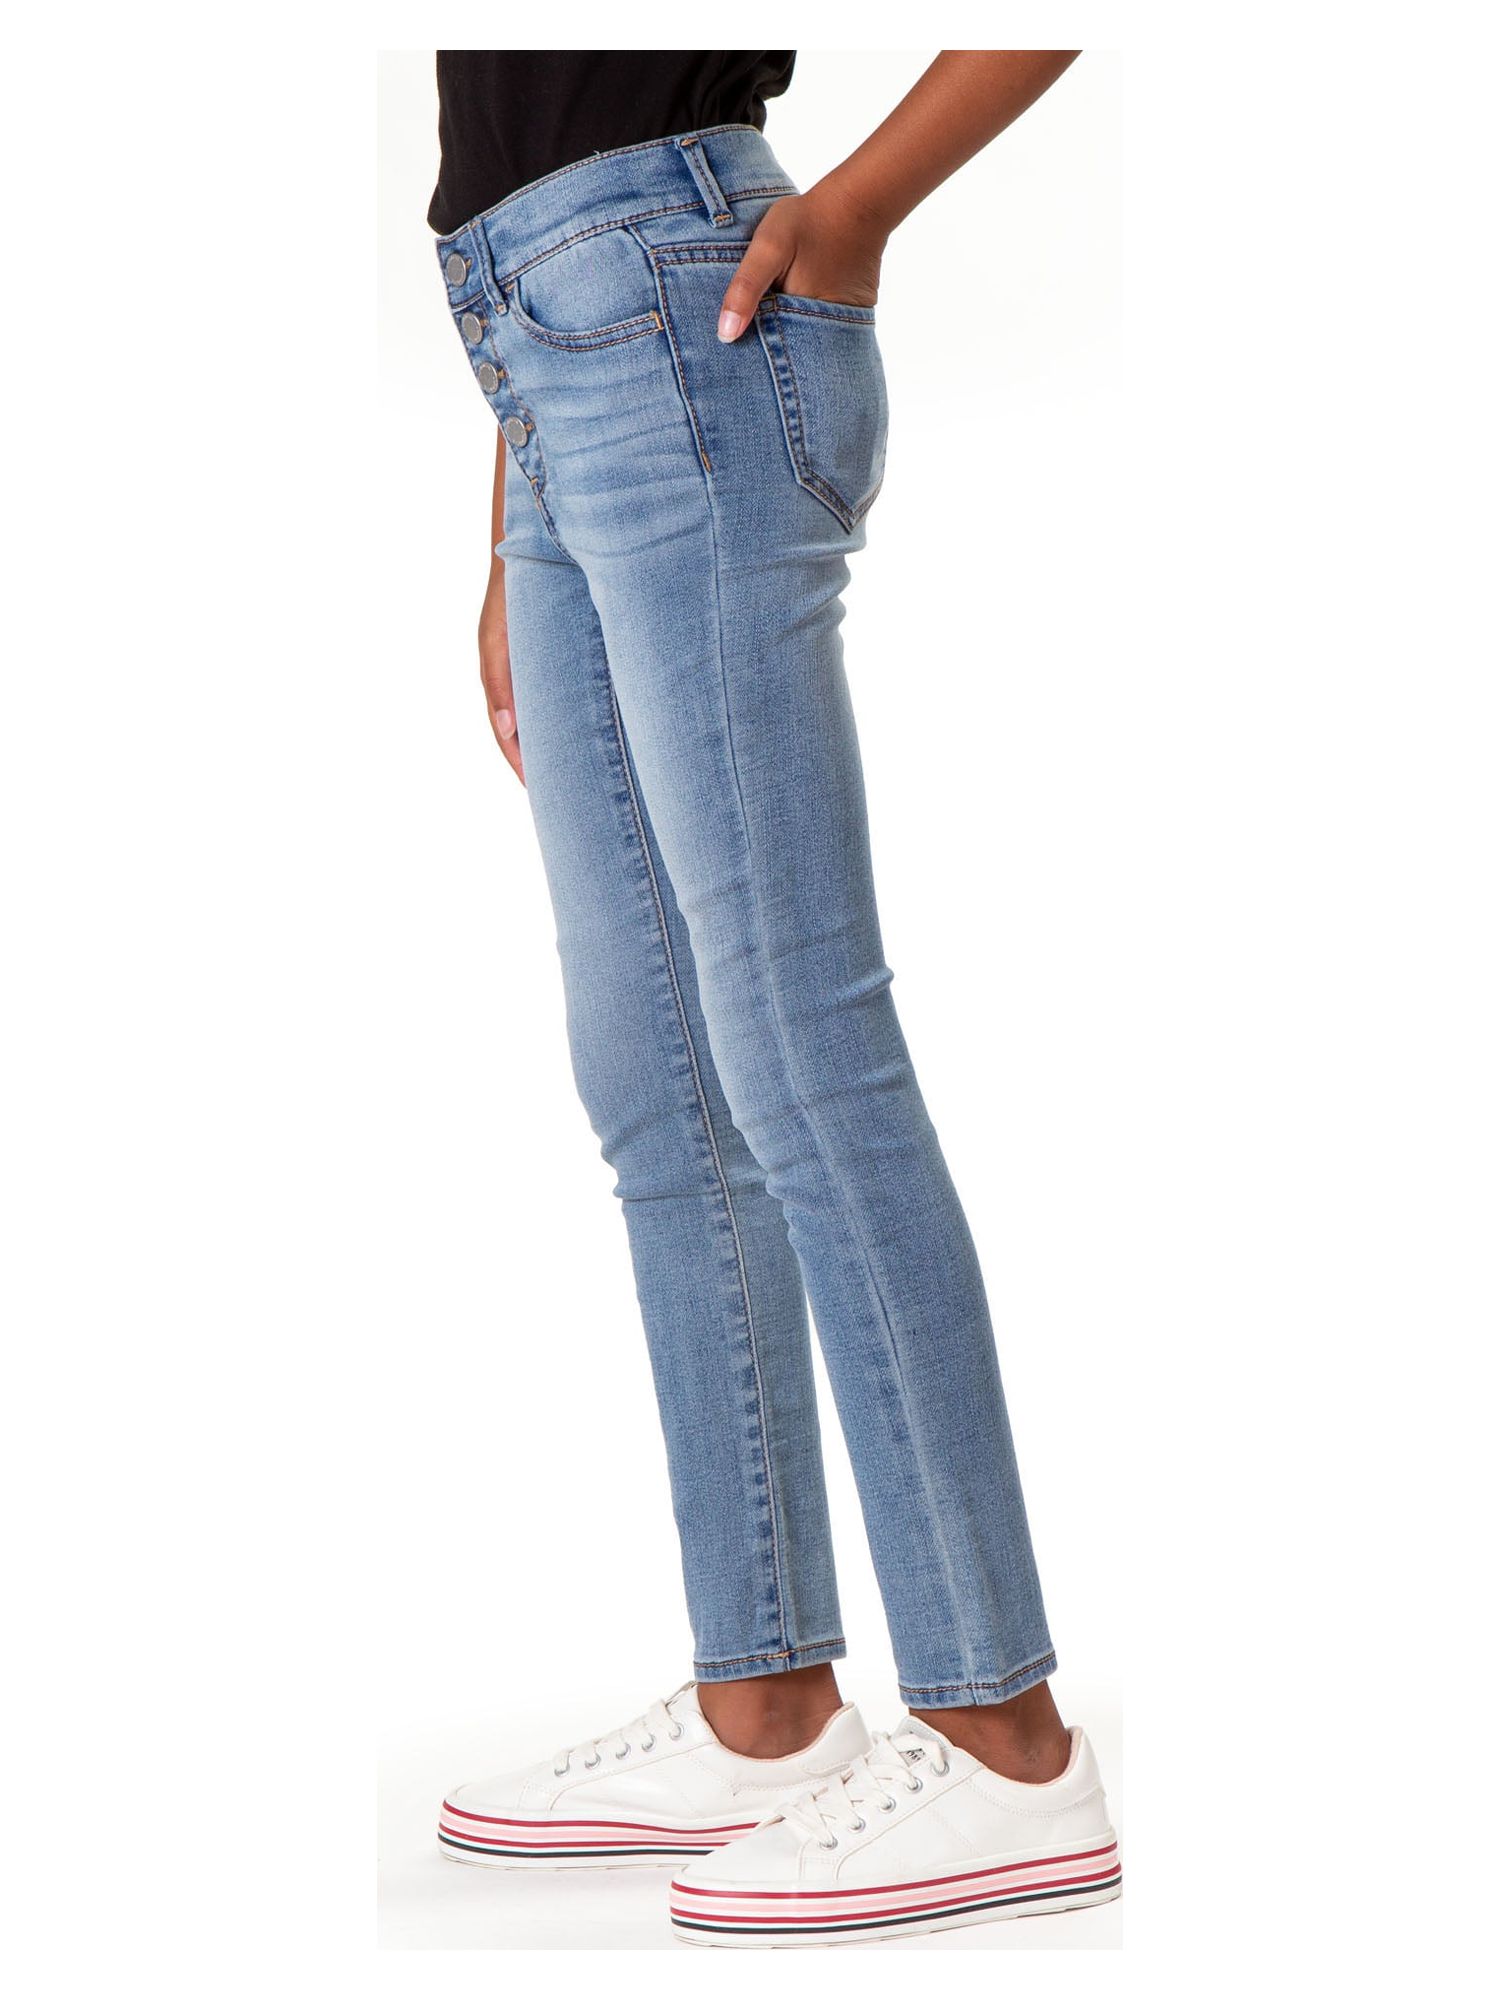 Jordache Girls Super Skinny High Rise Jeans, Sizes 5-18 & Slim - image 3 of 7